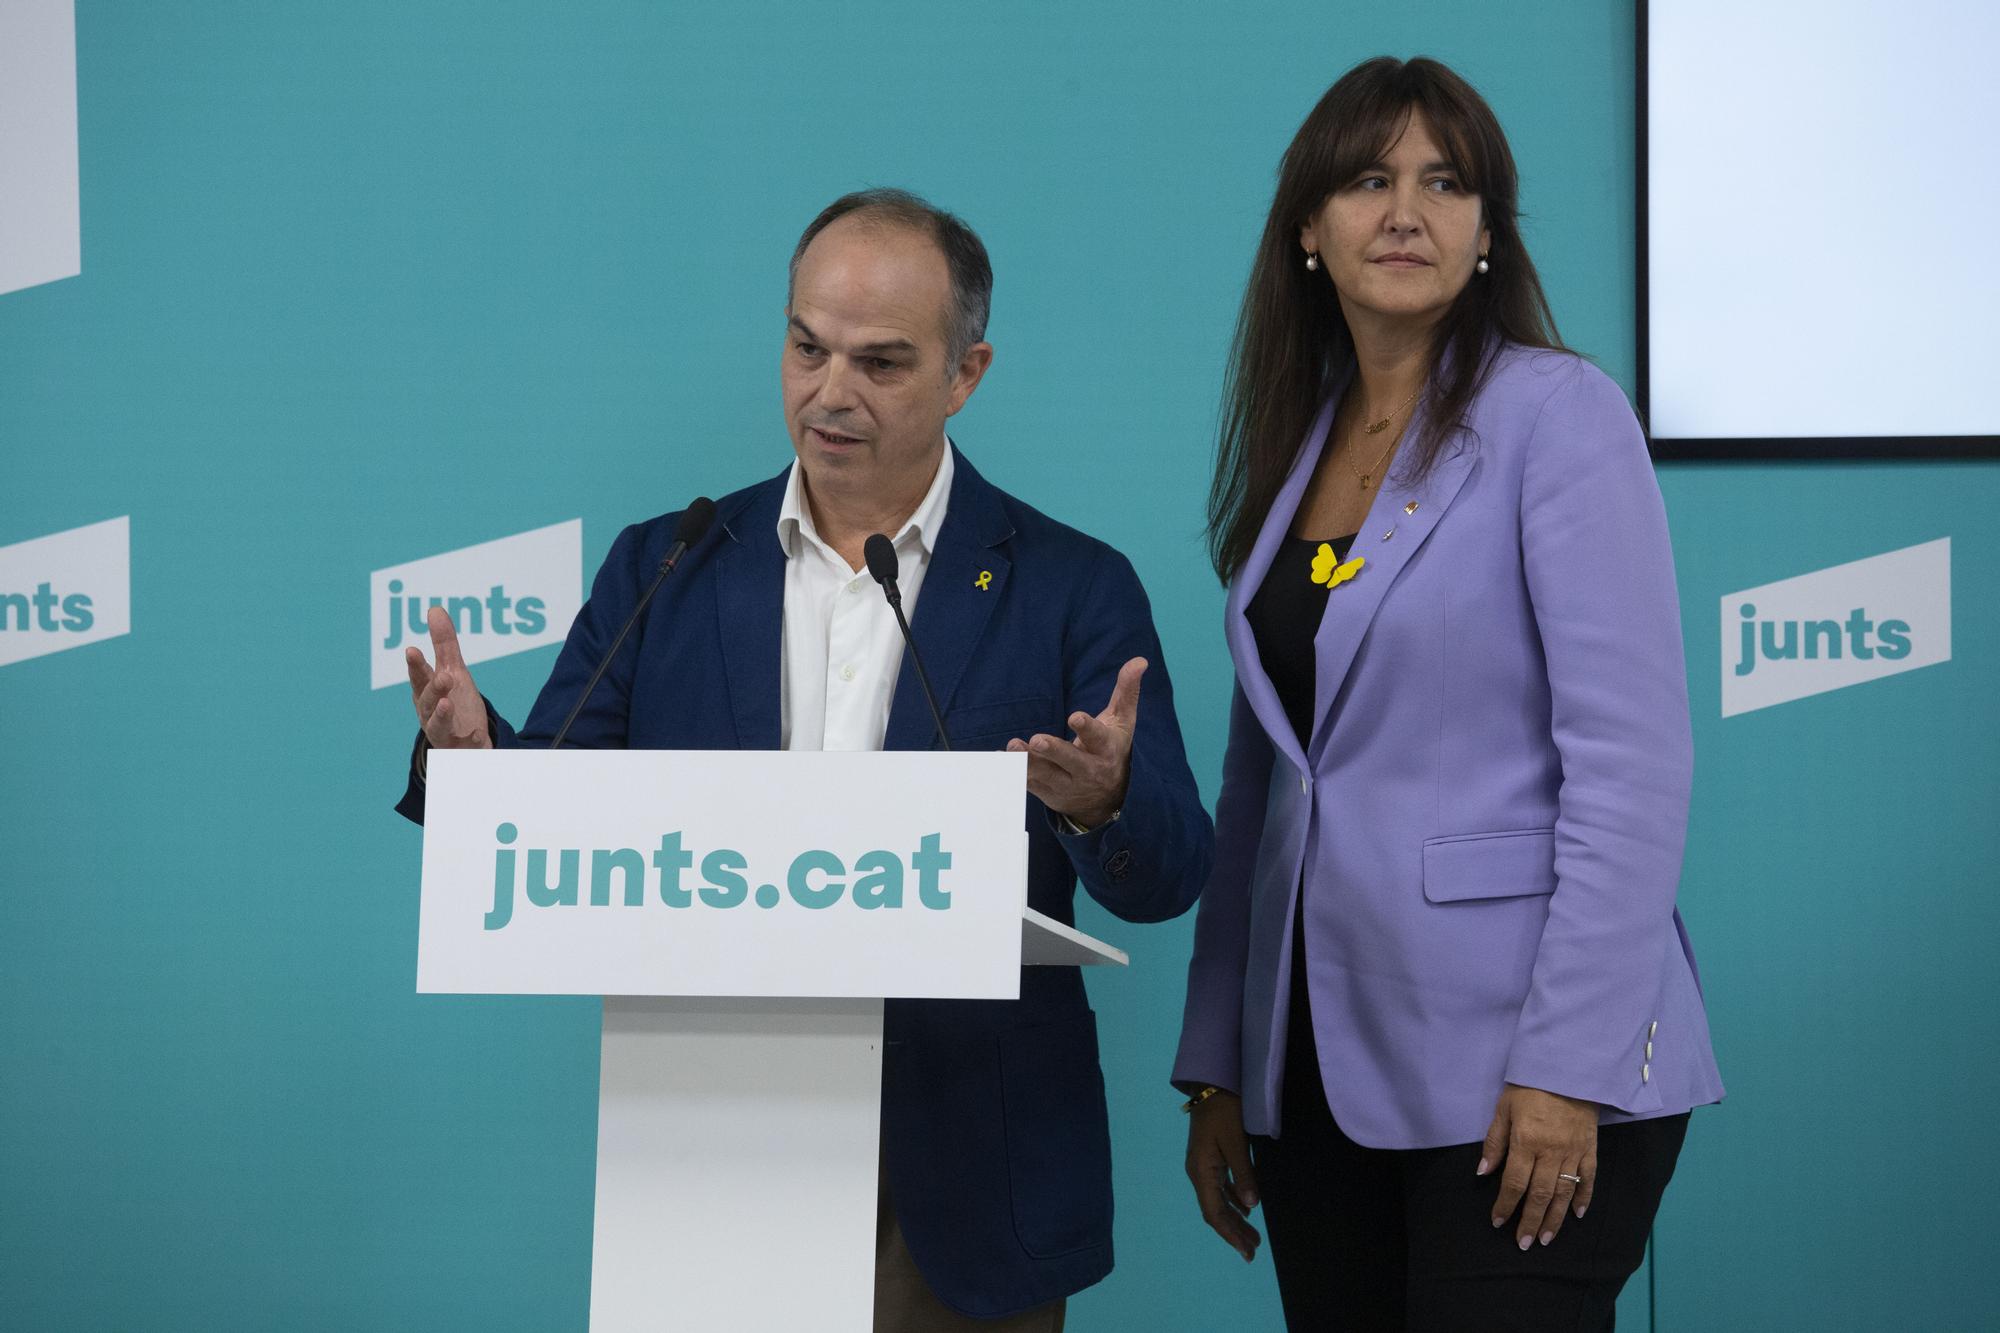 Rueda de prensa después de la reunión ejecutiva del partido de Junts x Cat con Jordi Turull y Laura Borràs